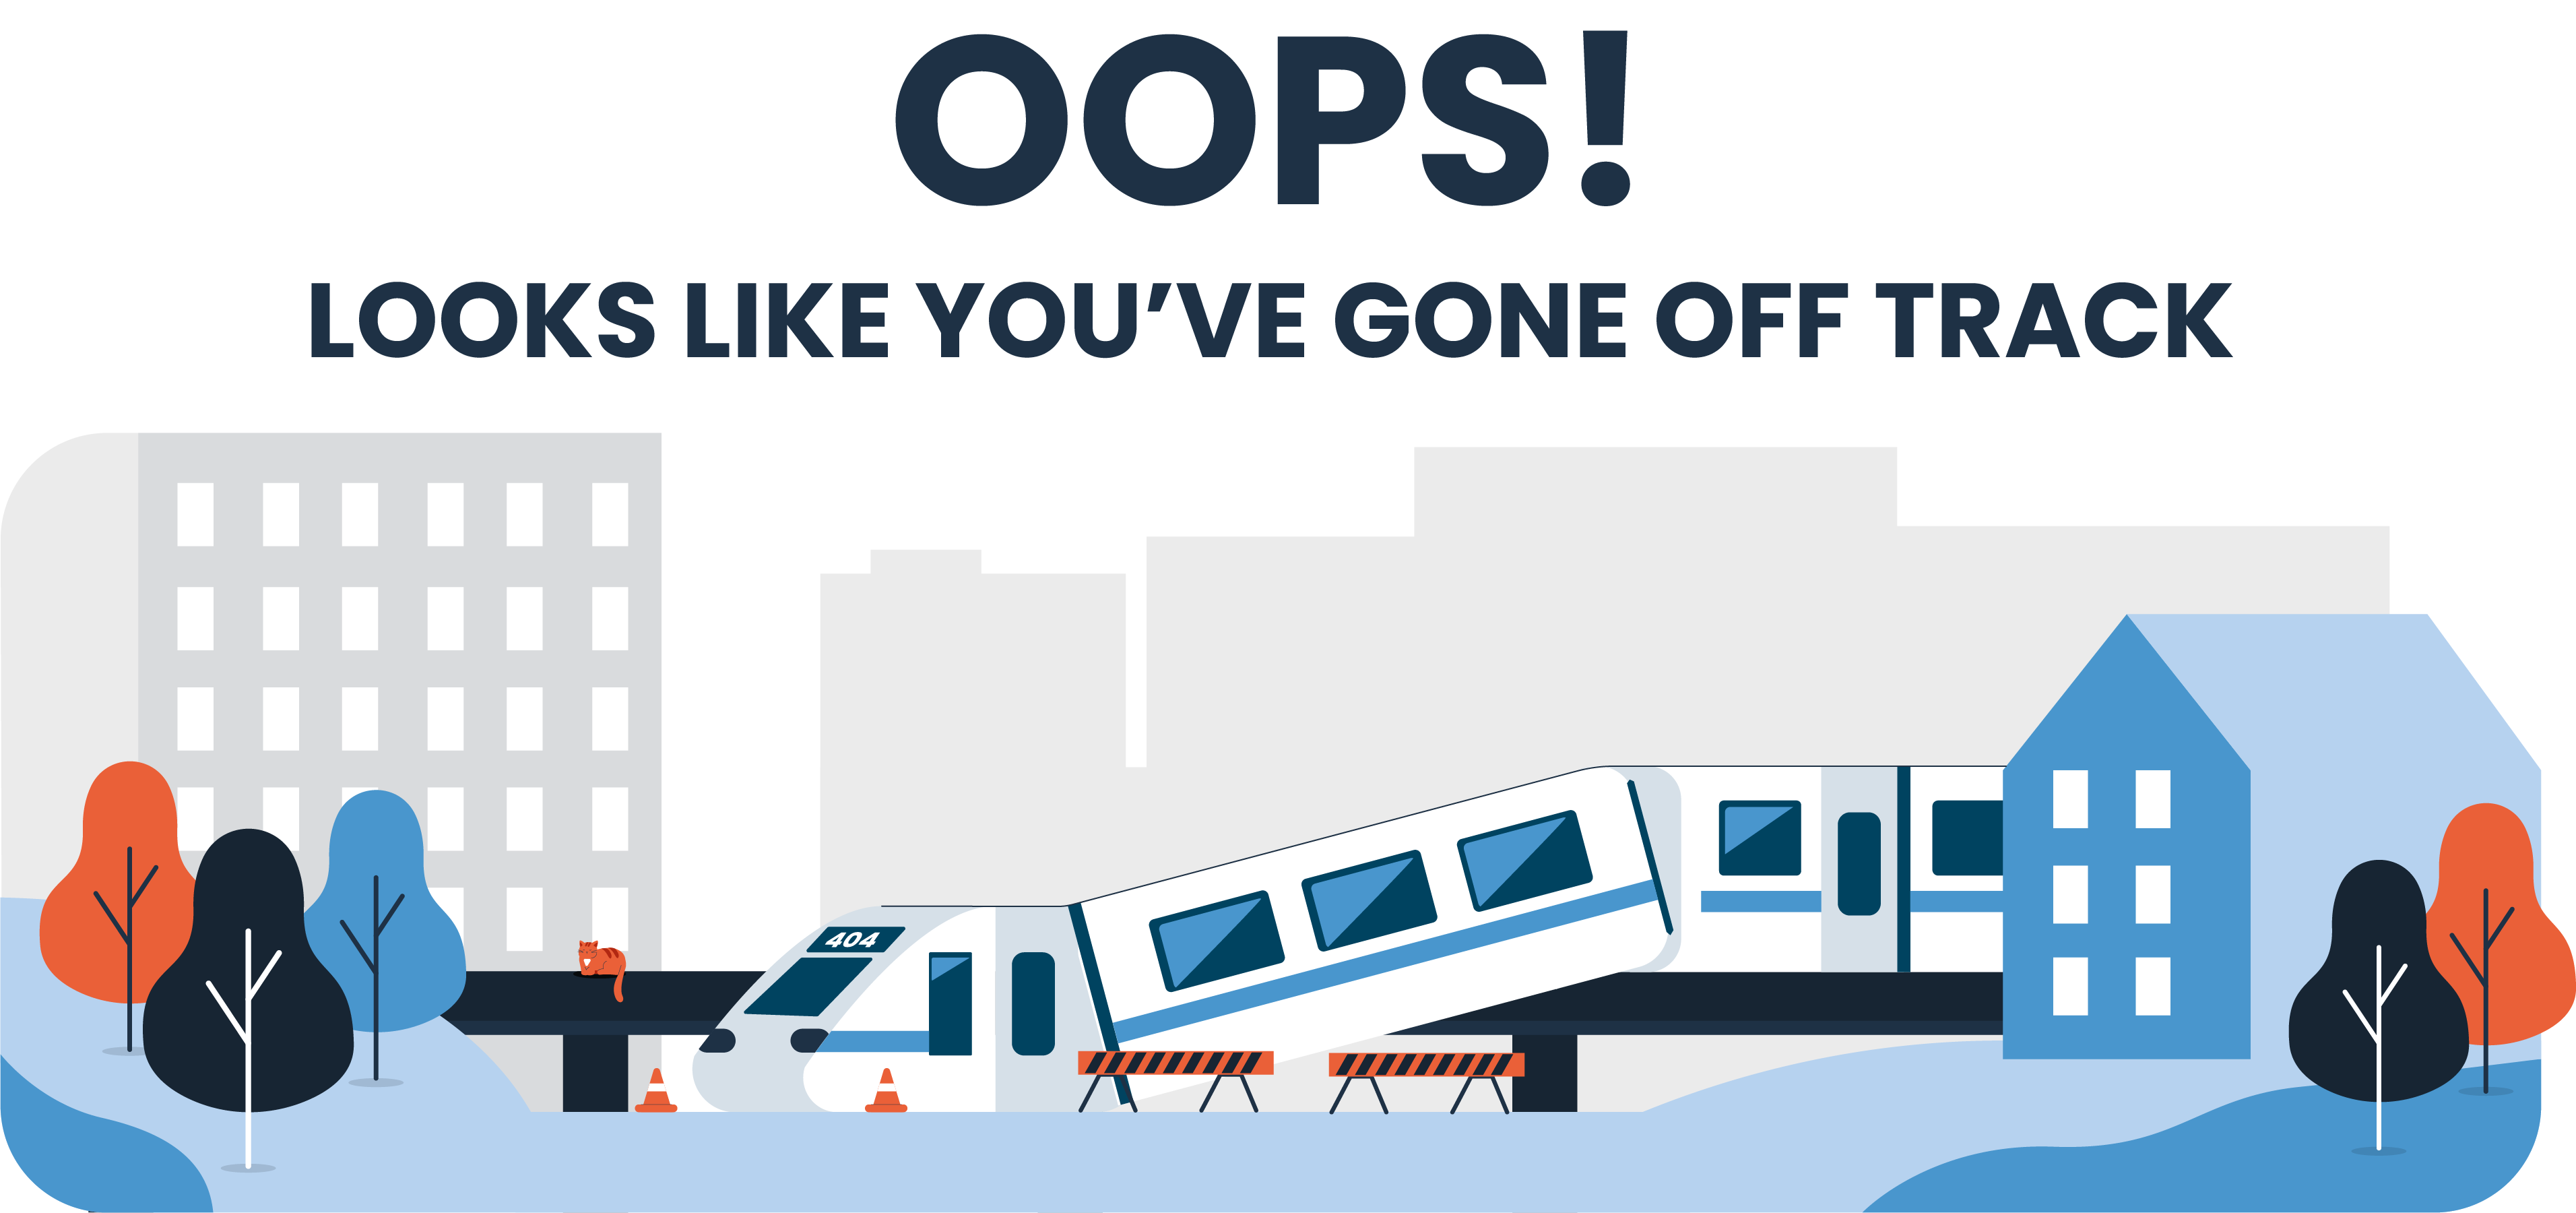 Derailed train 404